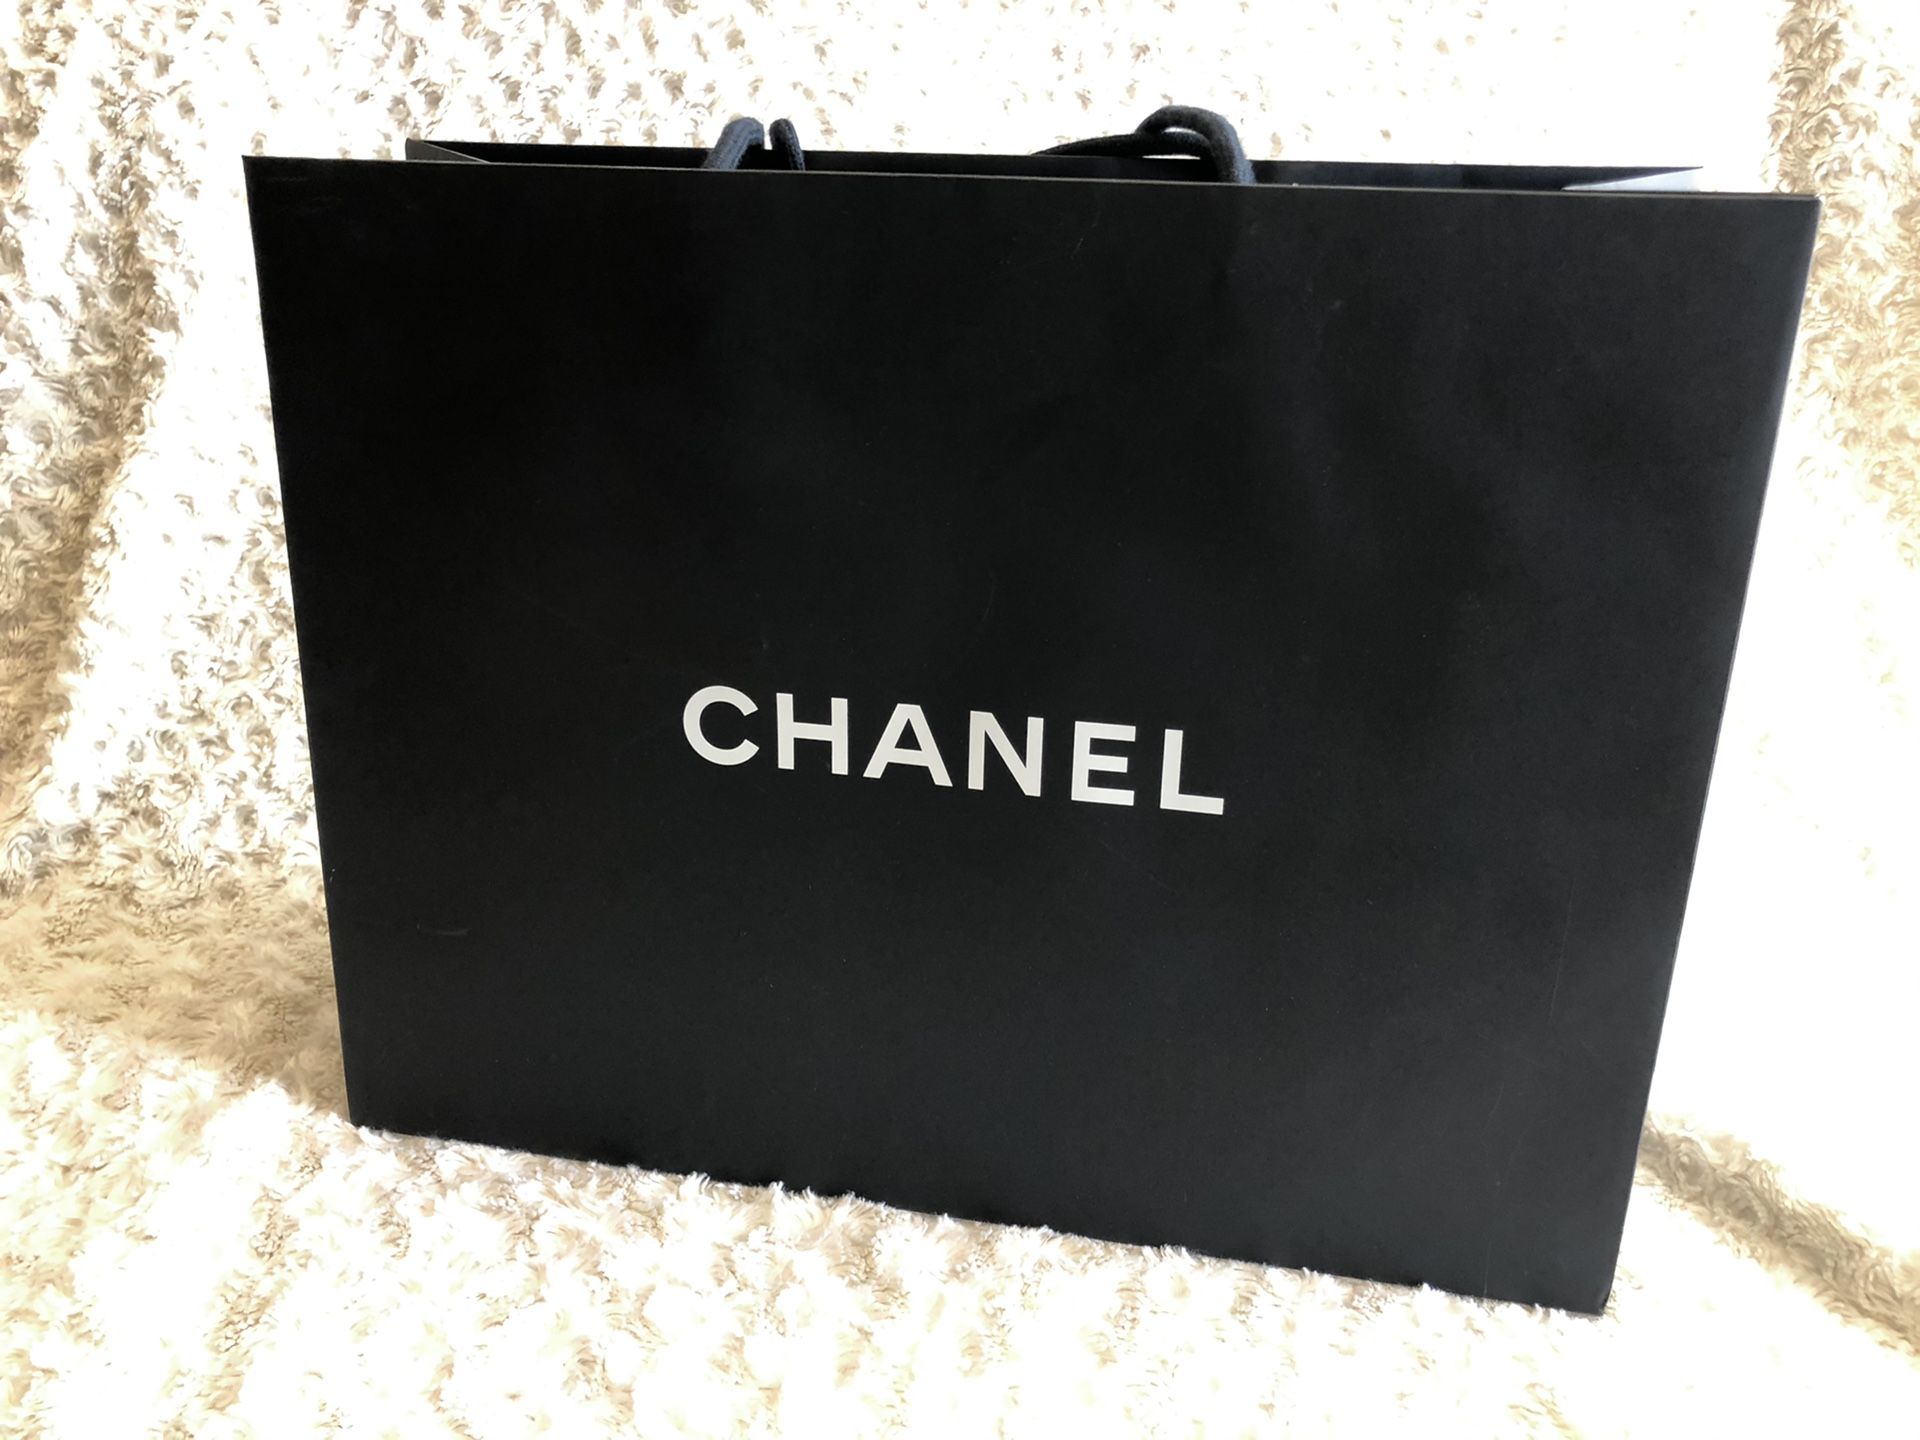 Chanel large black shopping bag